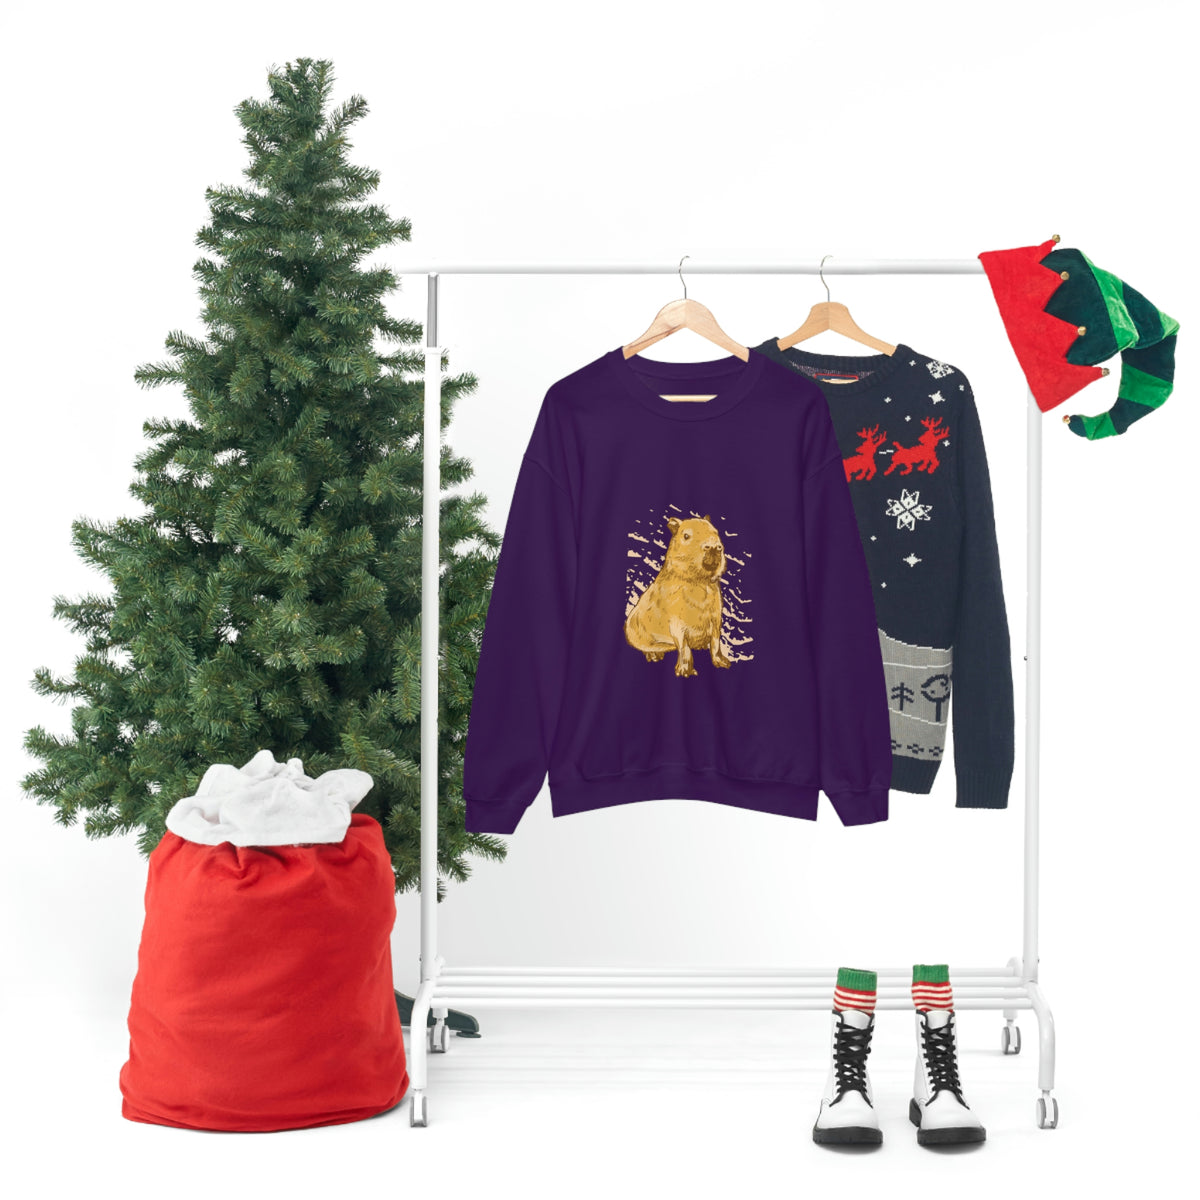 Realistic Capybara - Unisex Sweatshirt